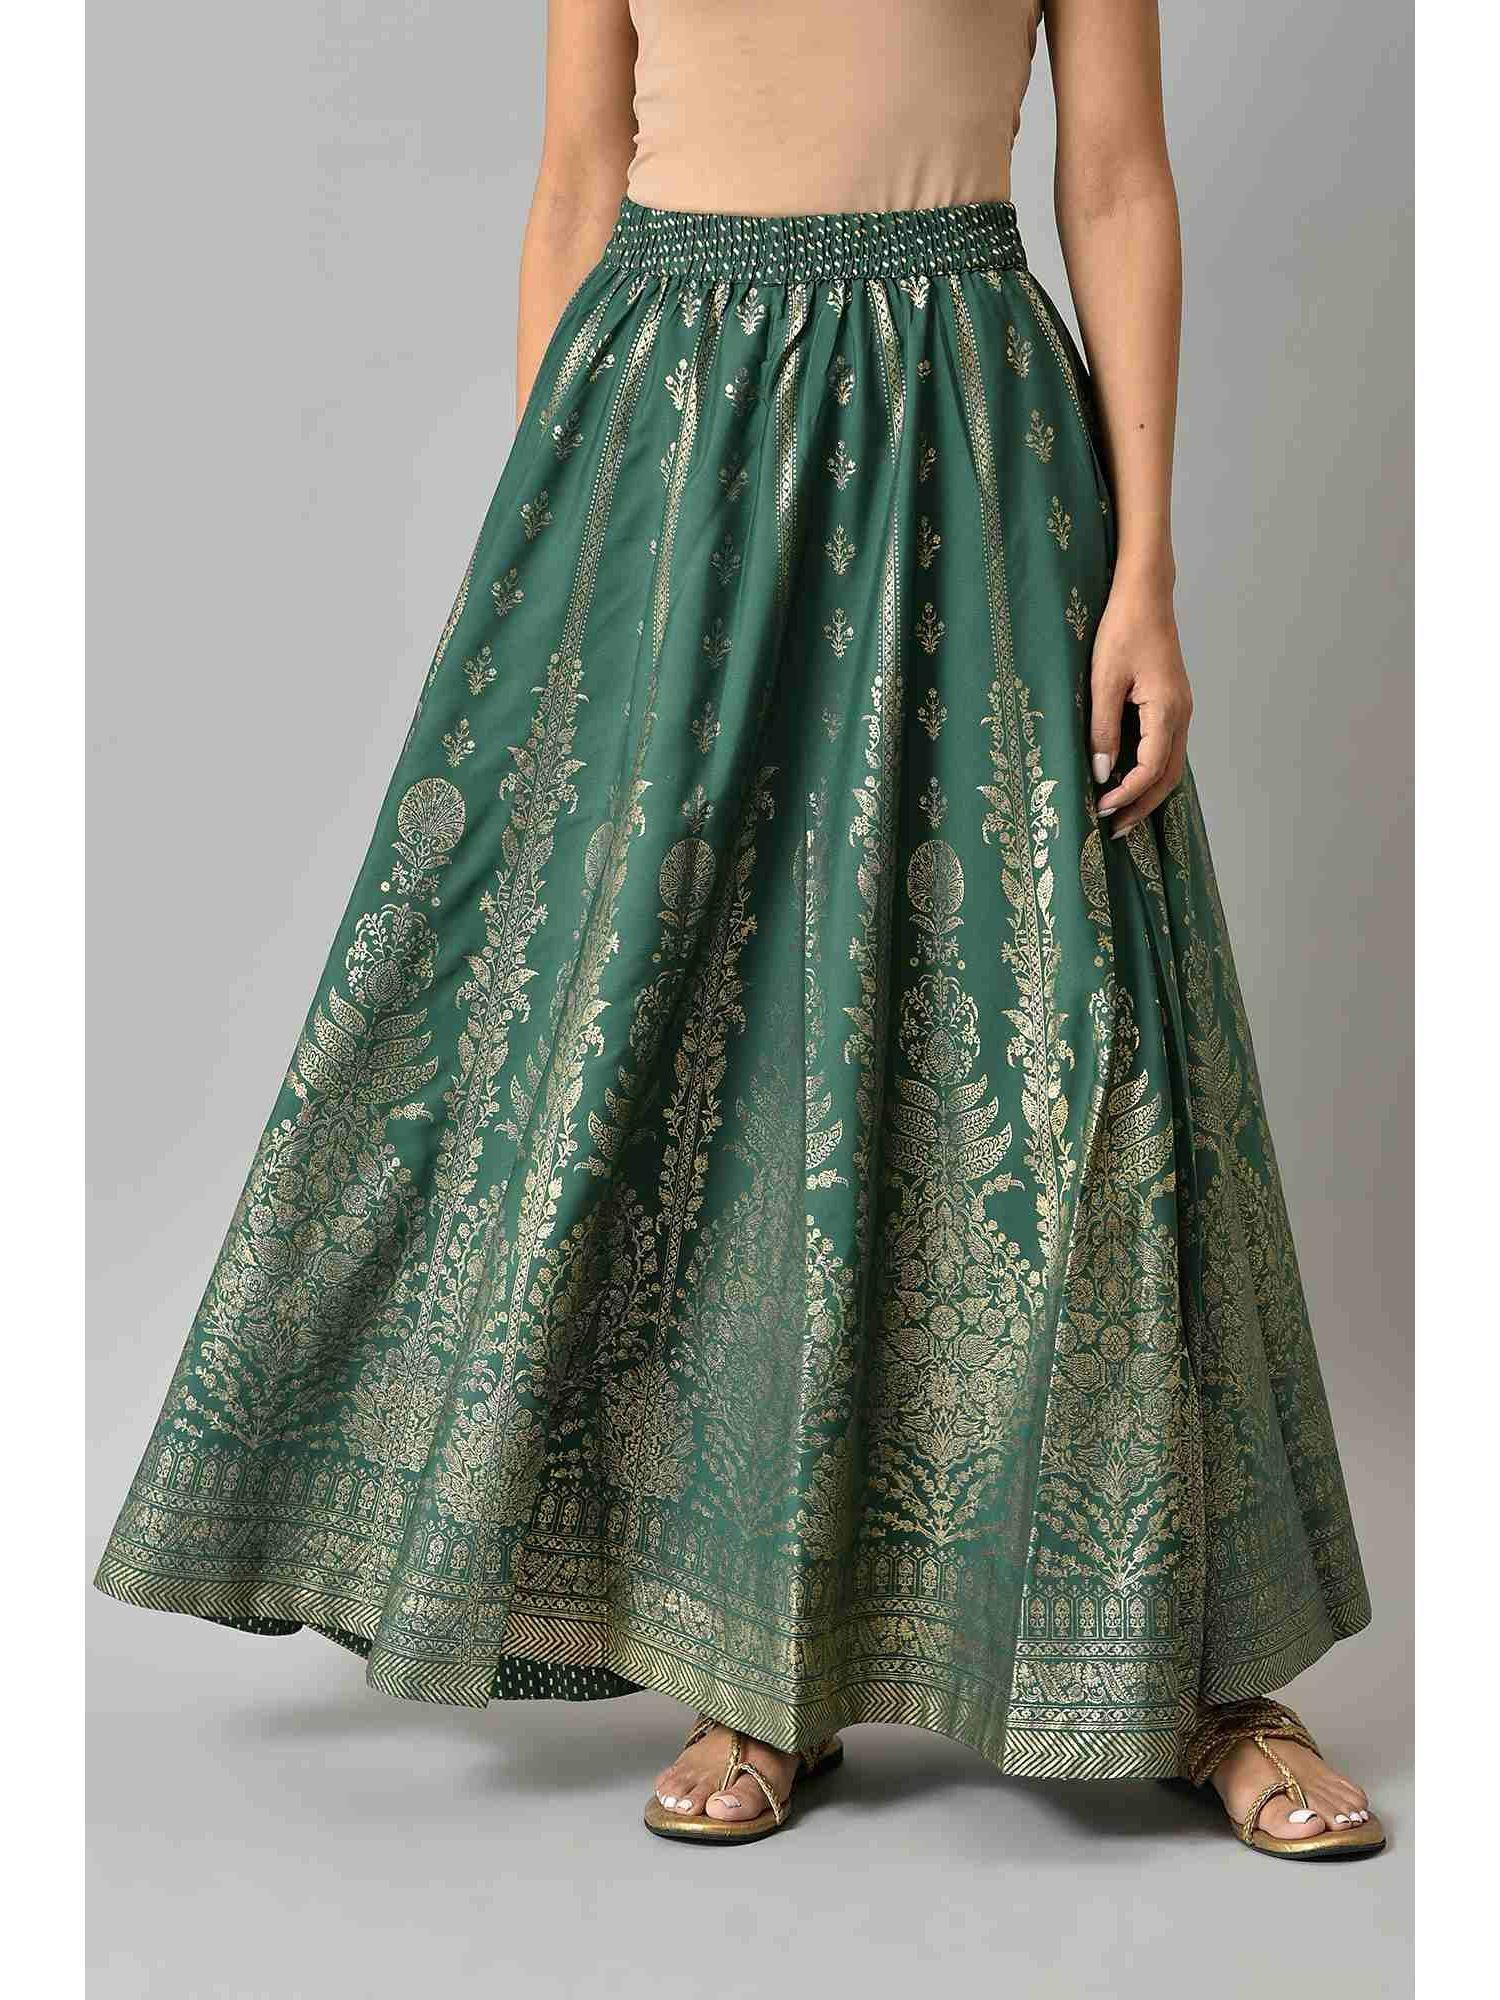 green half circle ethnic skirt